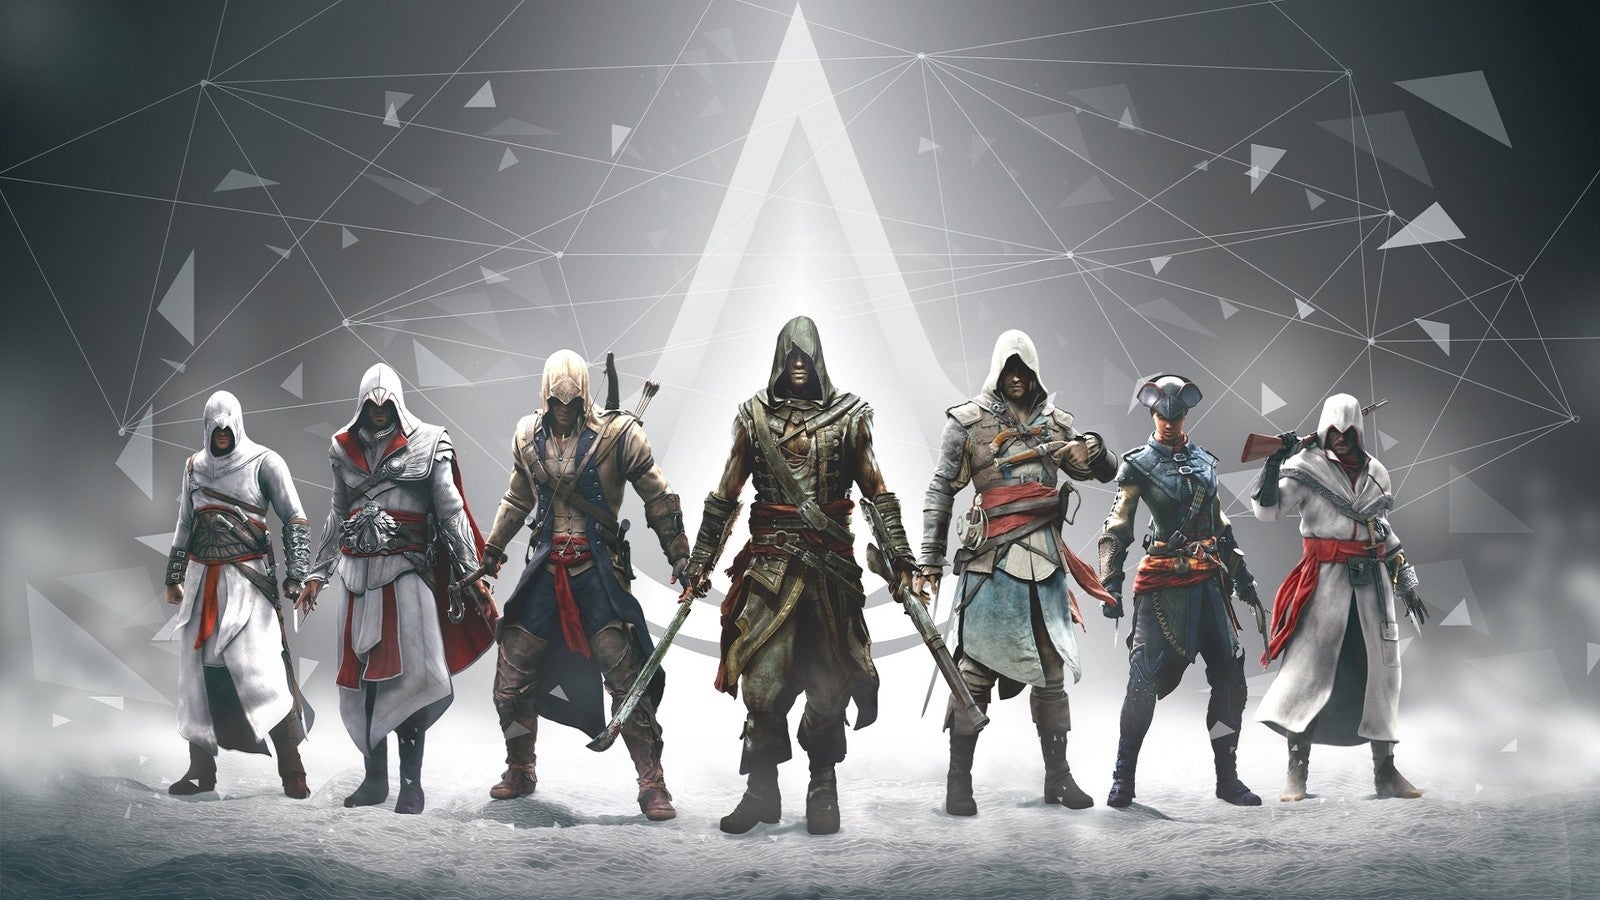 Obrazki dla Seria Assassin's Creed na dobre kończy z premierami co roku?